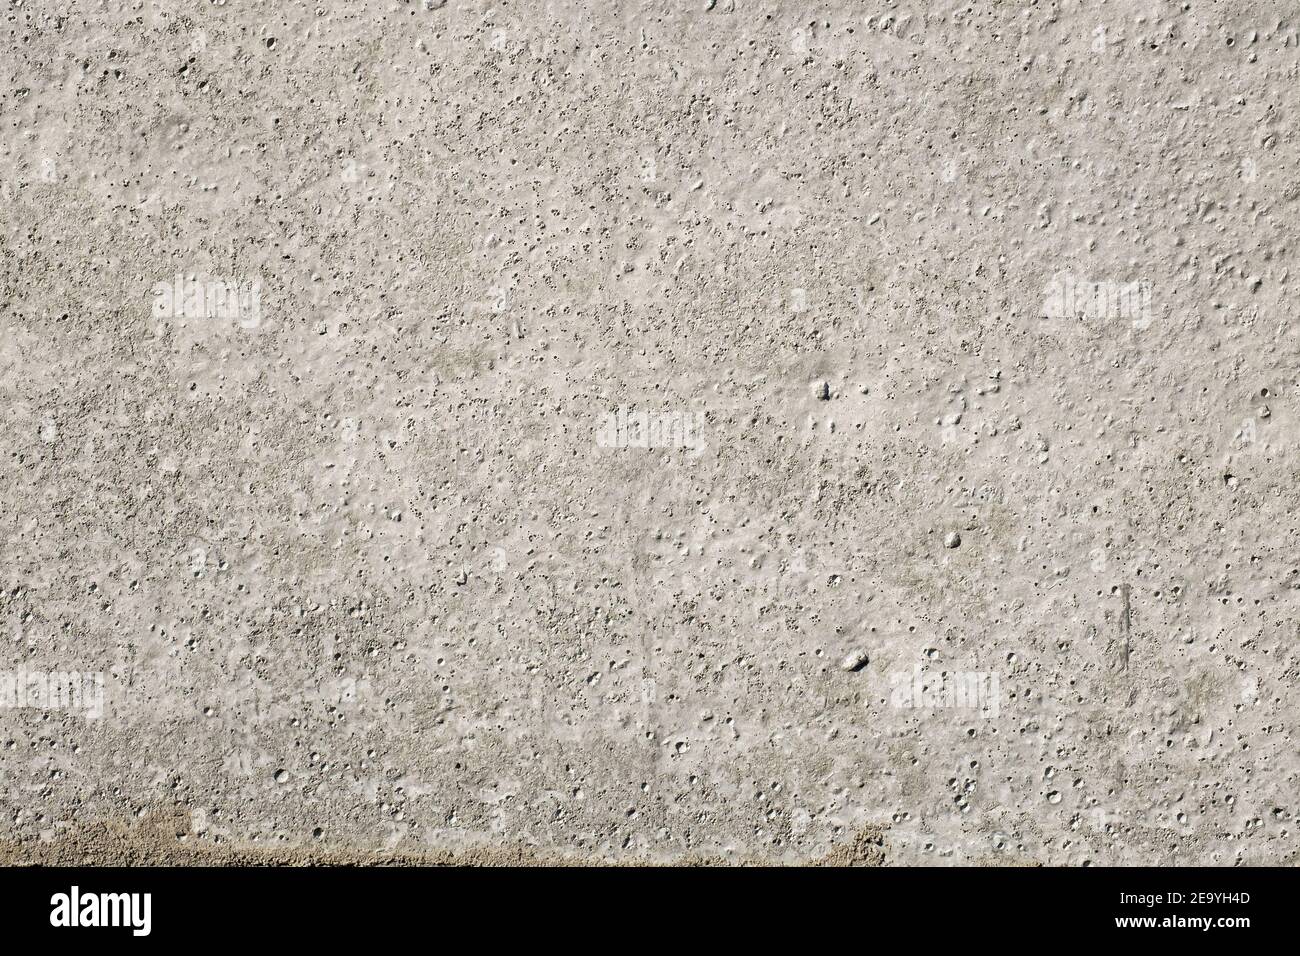 Gray air bubble concrete surface Stock Photo